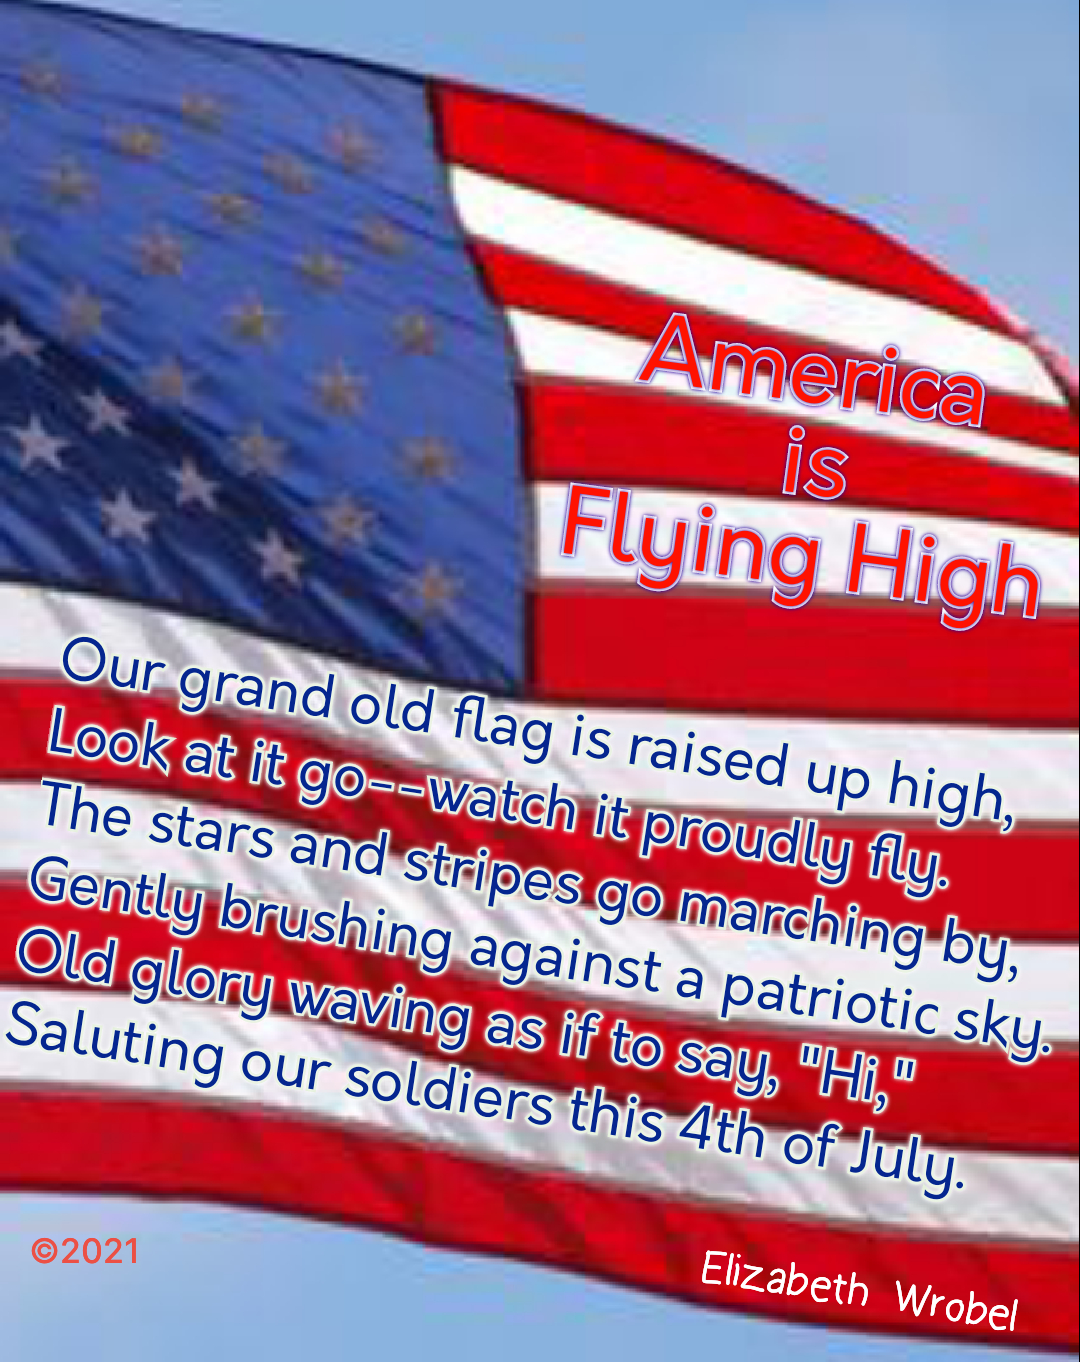 America is Flying High a patriotic poem by Elizabeth Wrobel